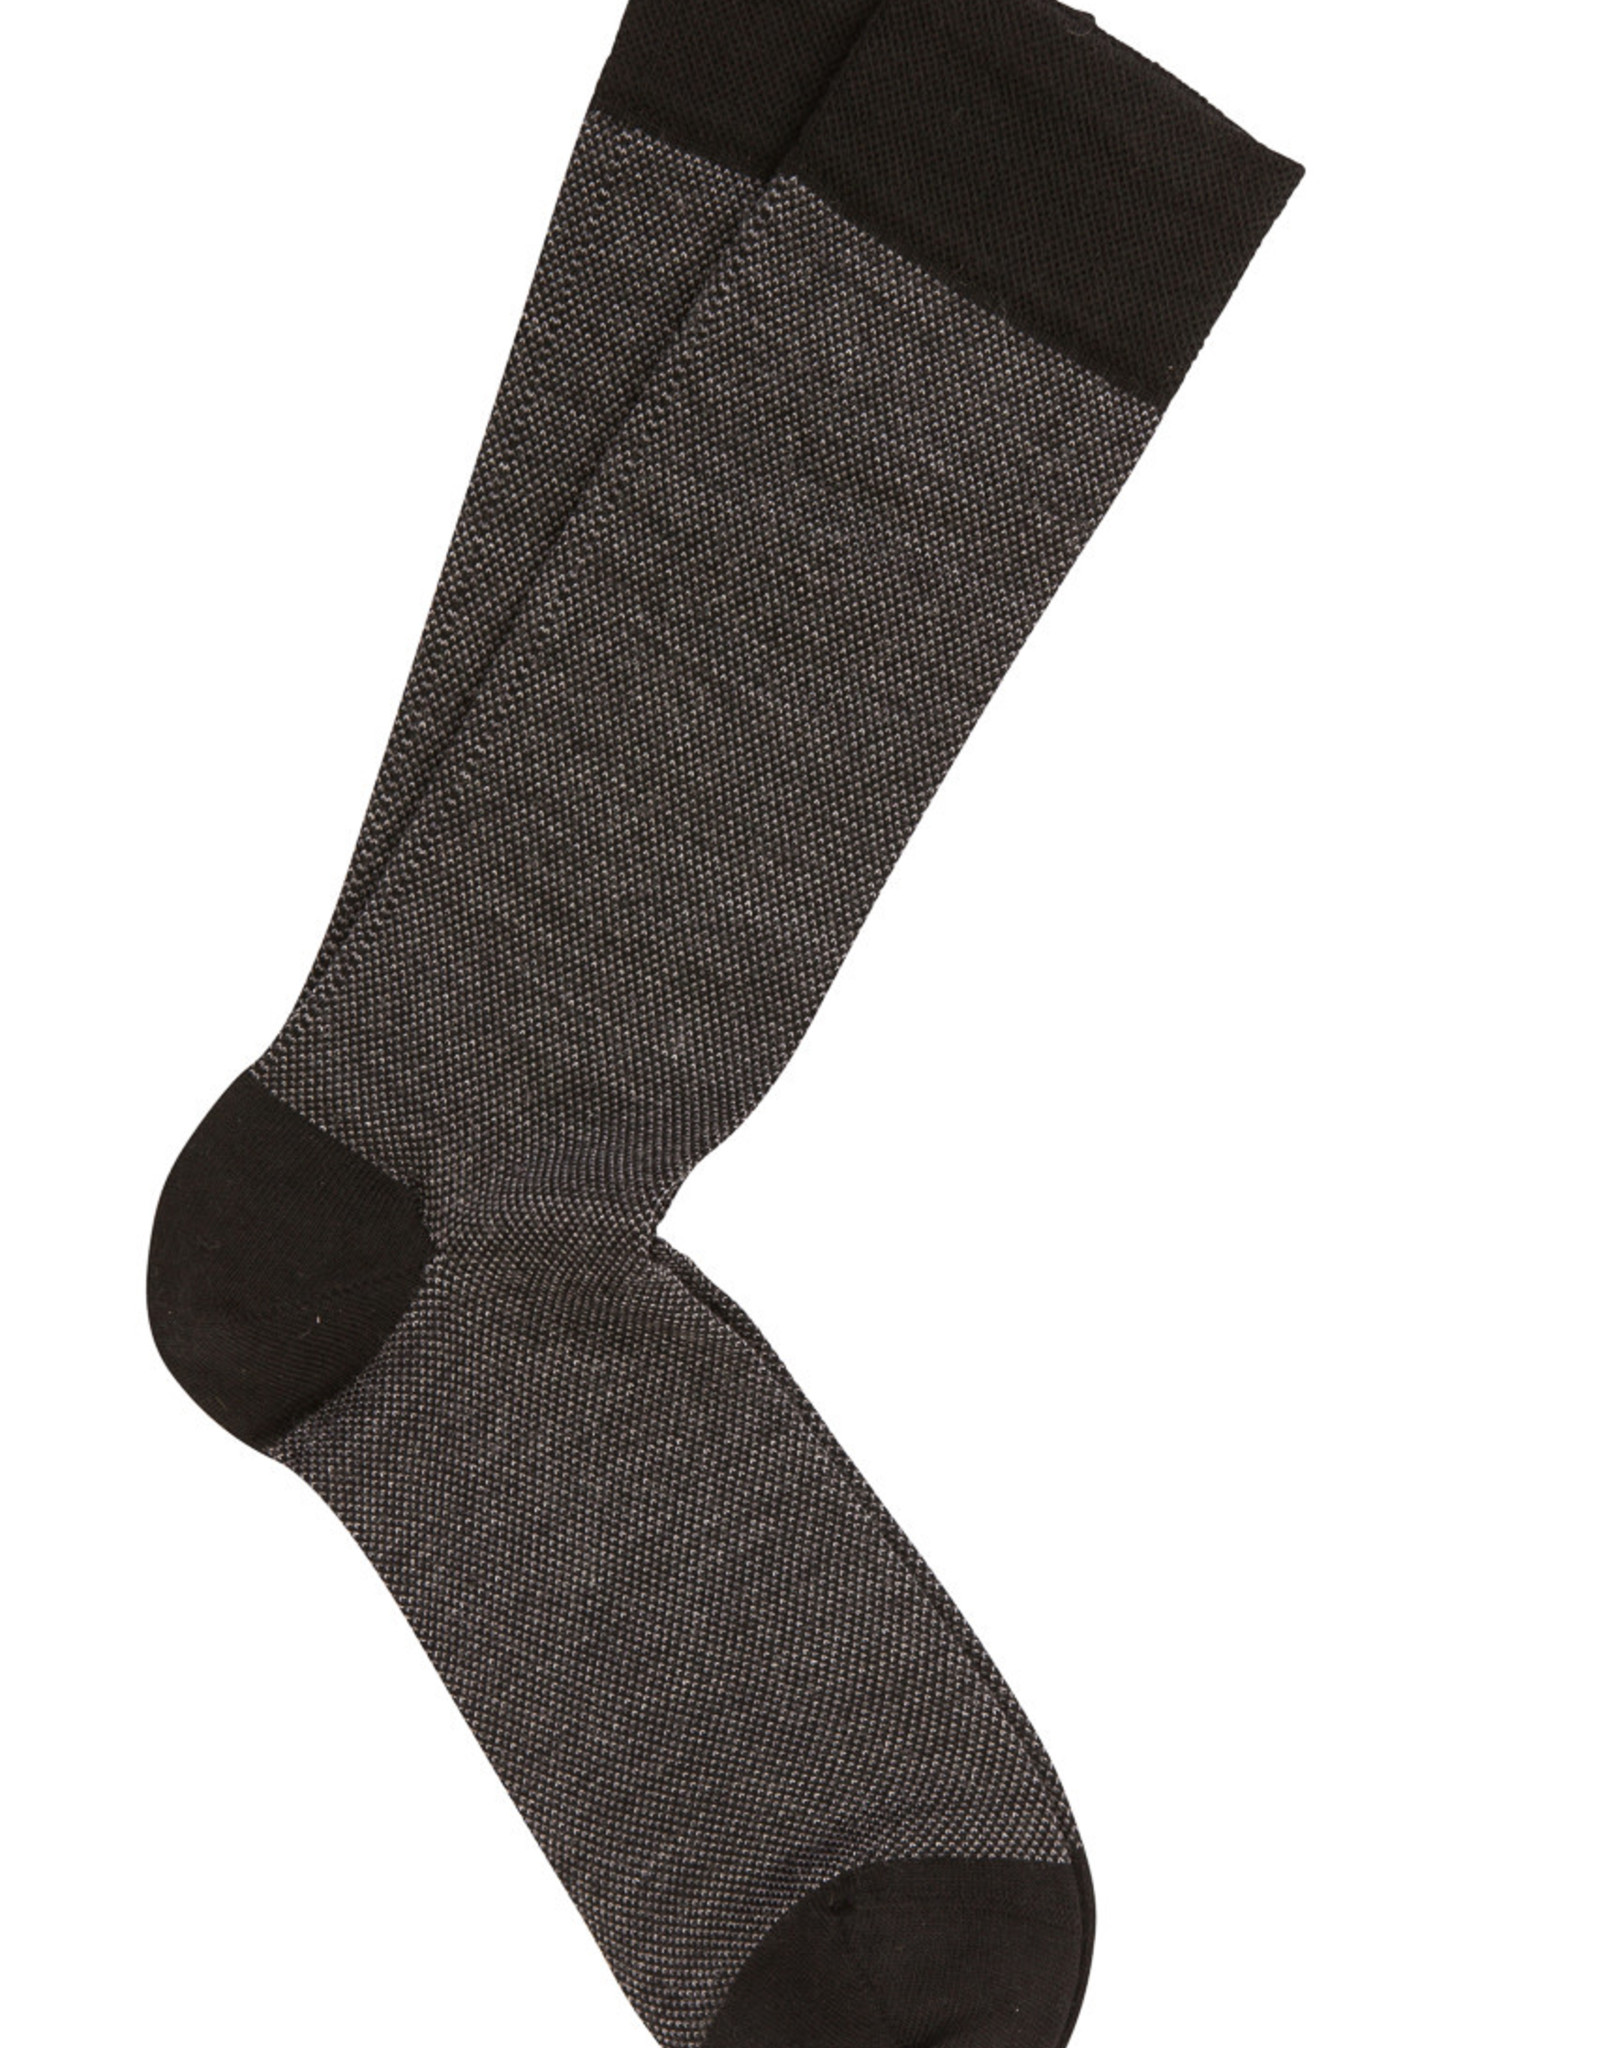 Marcoliani Marcoliani socks black birdseye